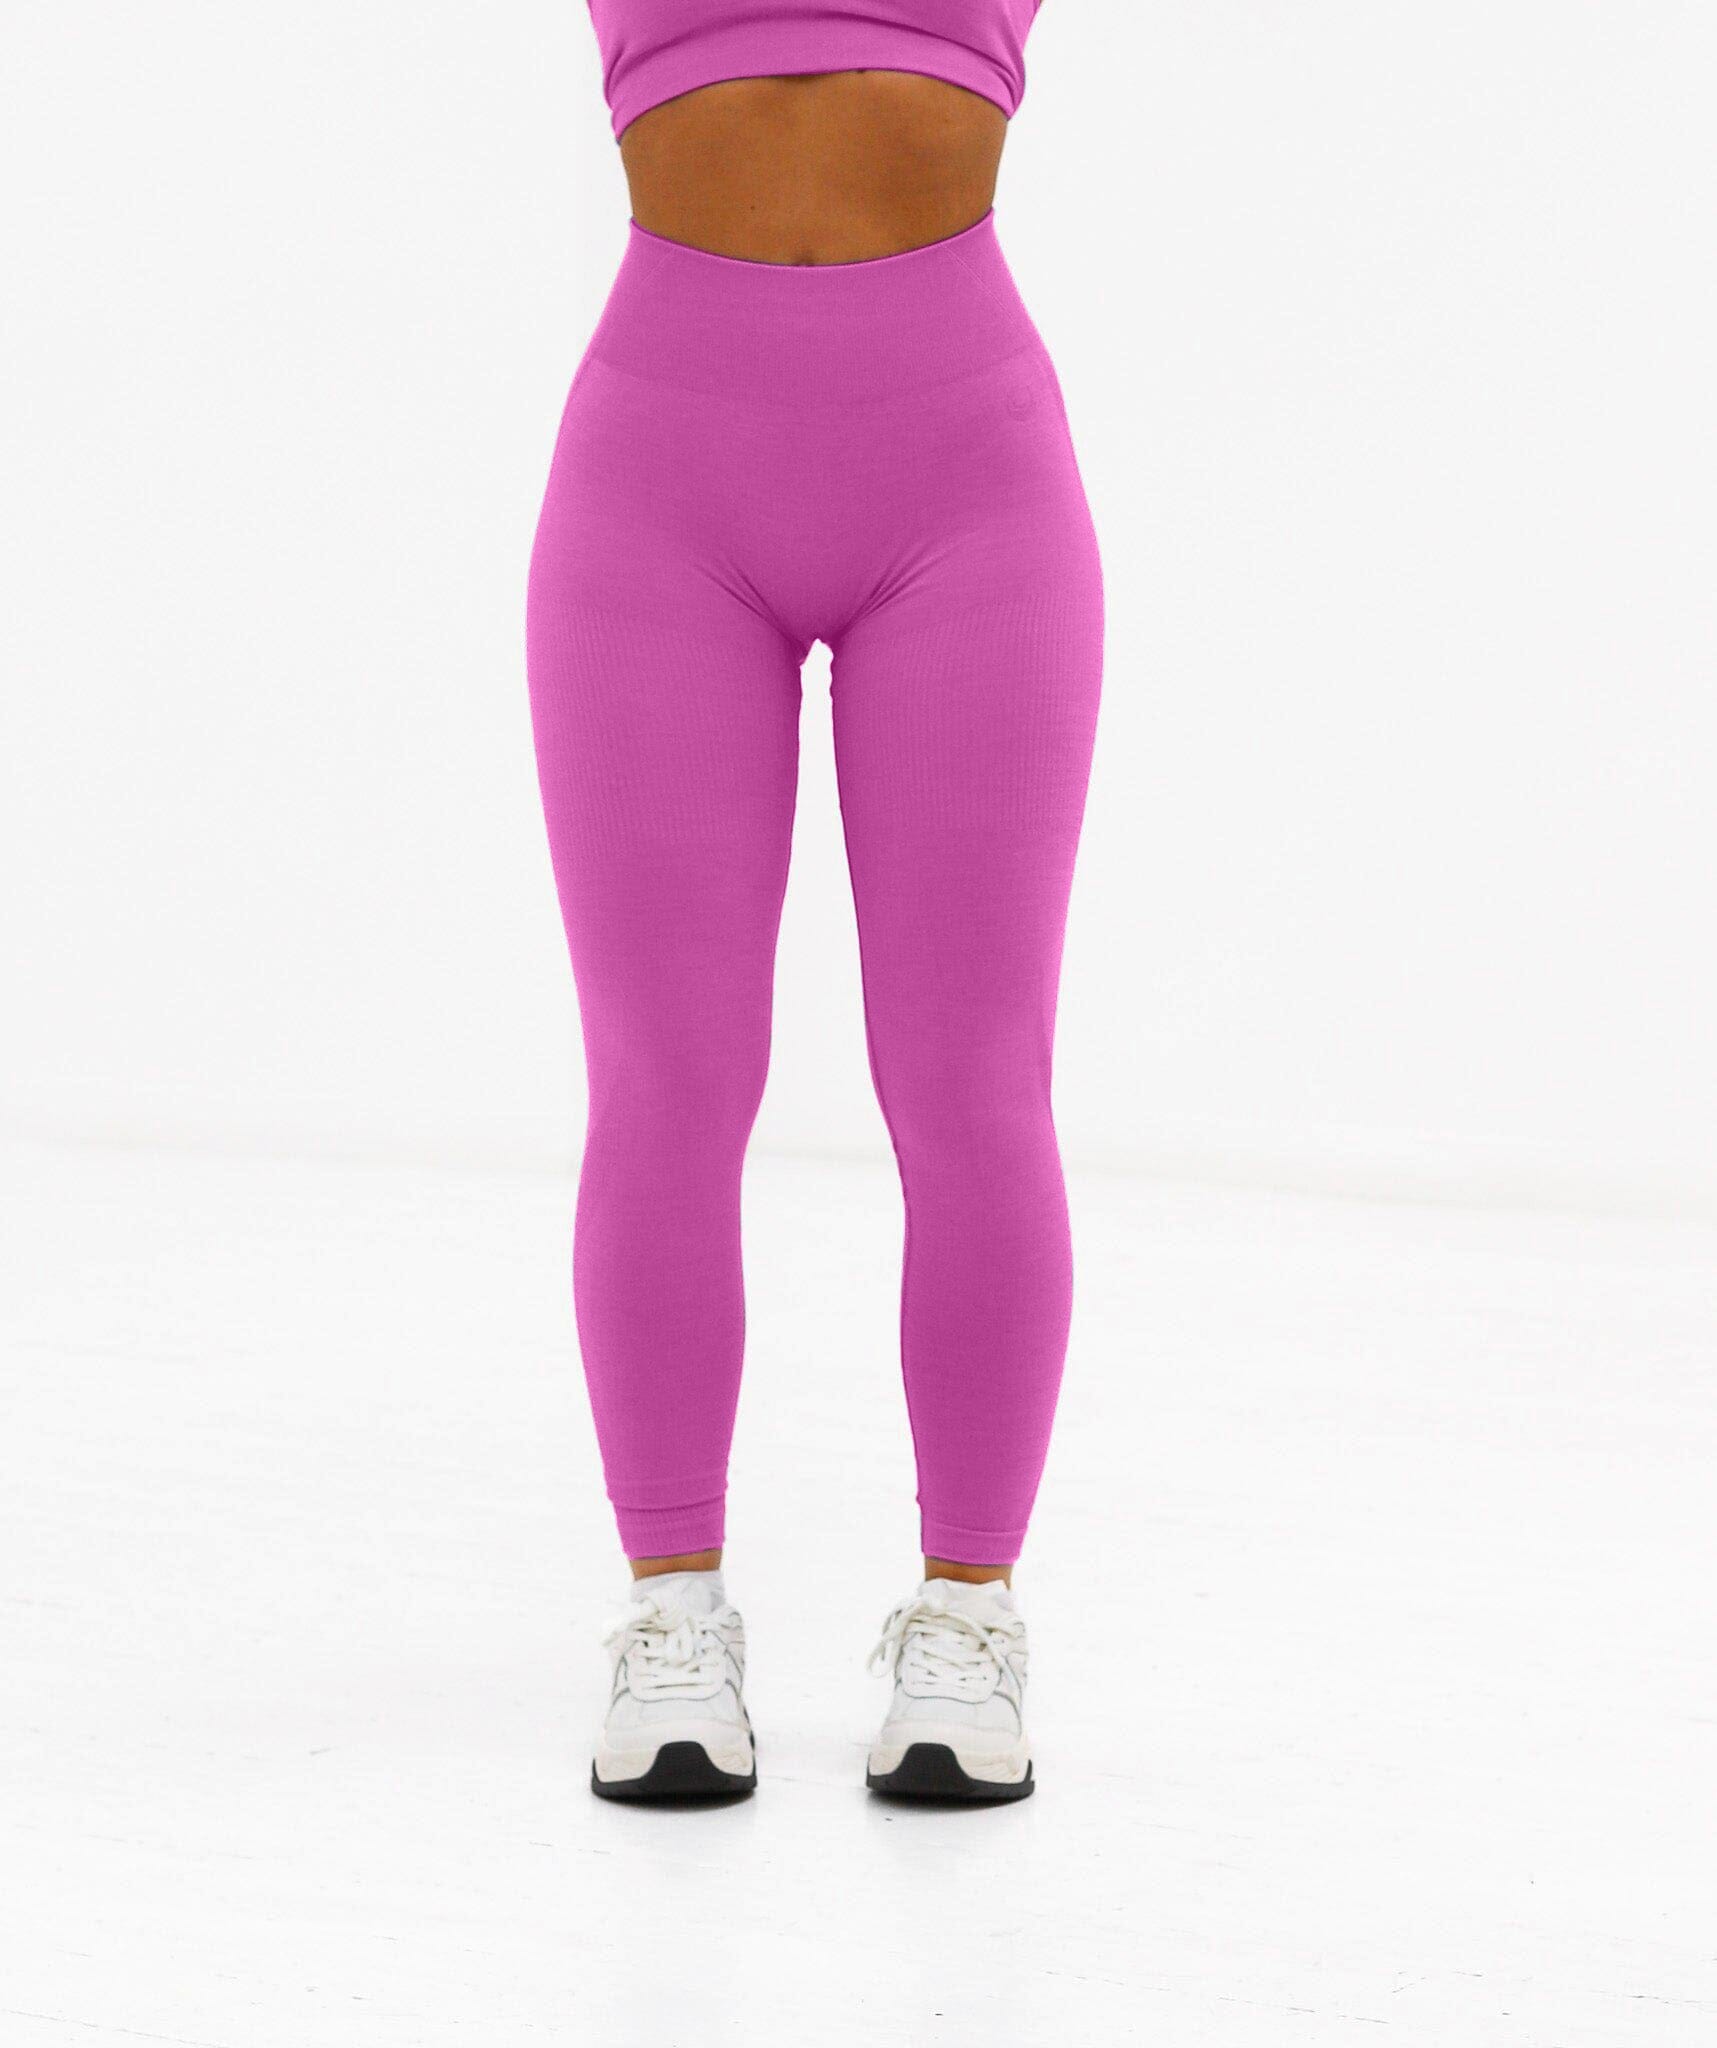 Lazuli Label Leggings Gym Wear Workout Red Size XS New Unworn